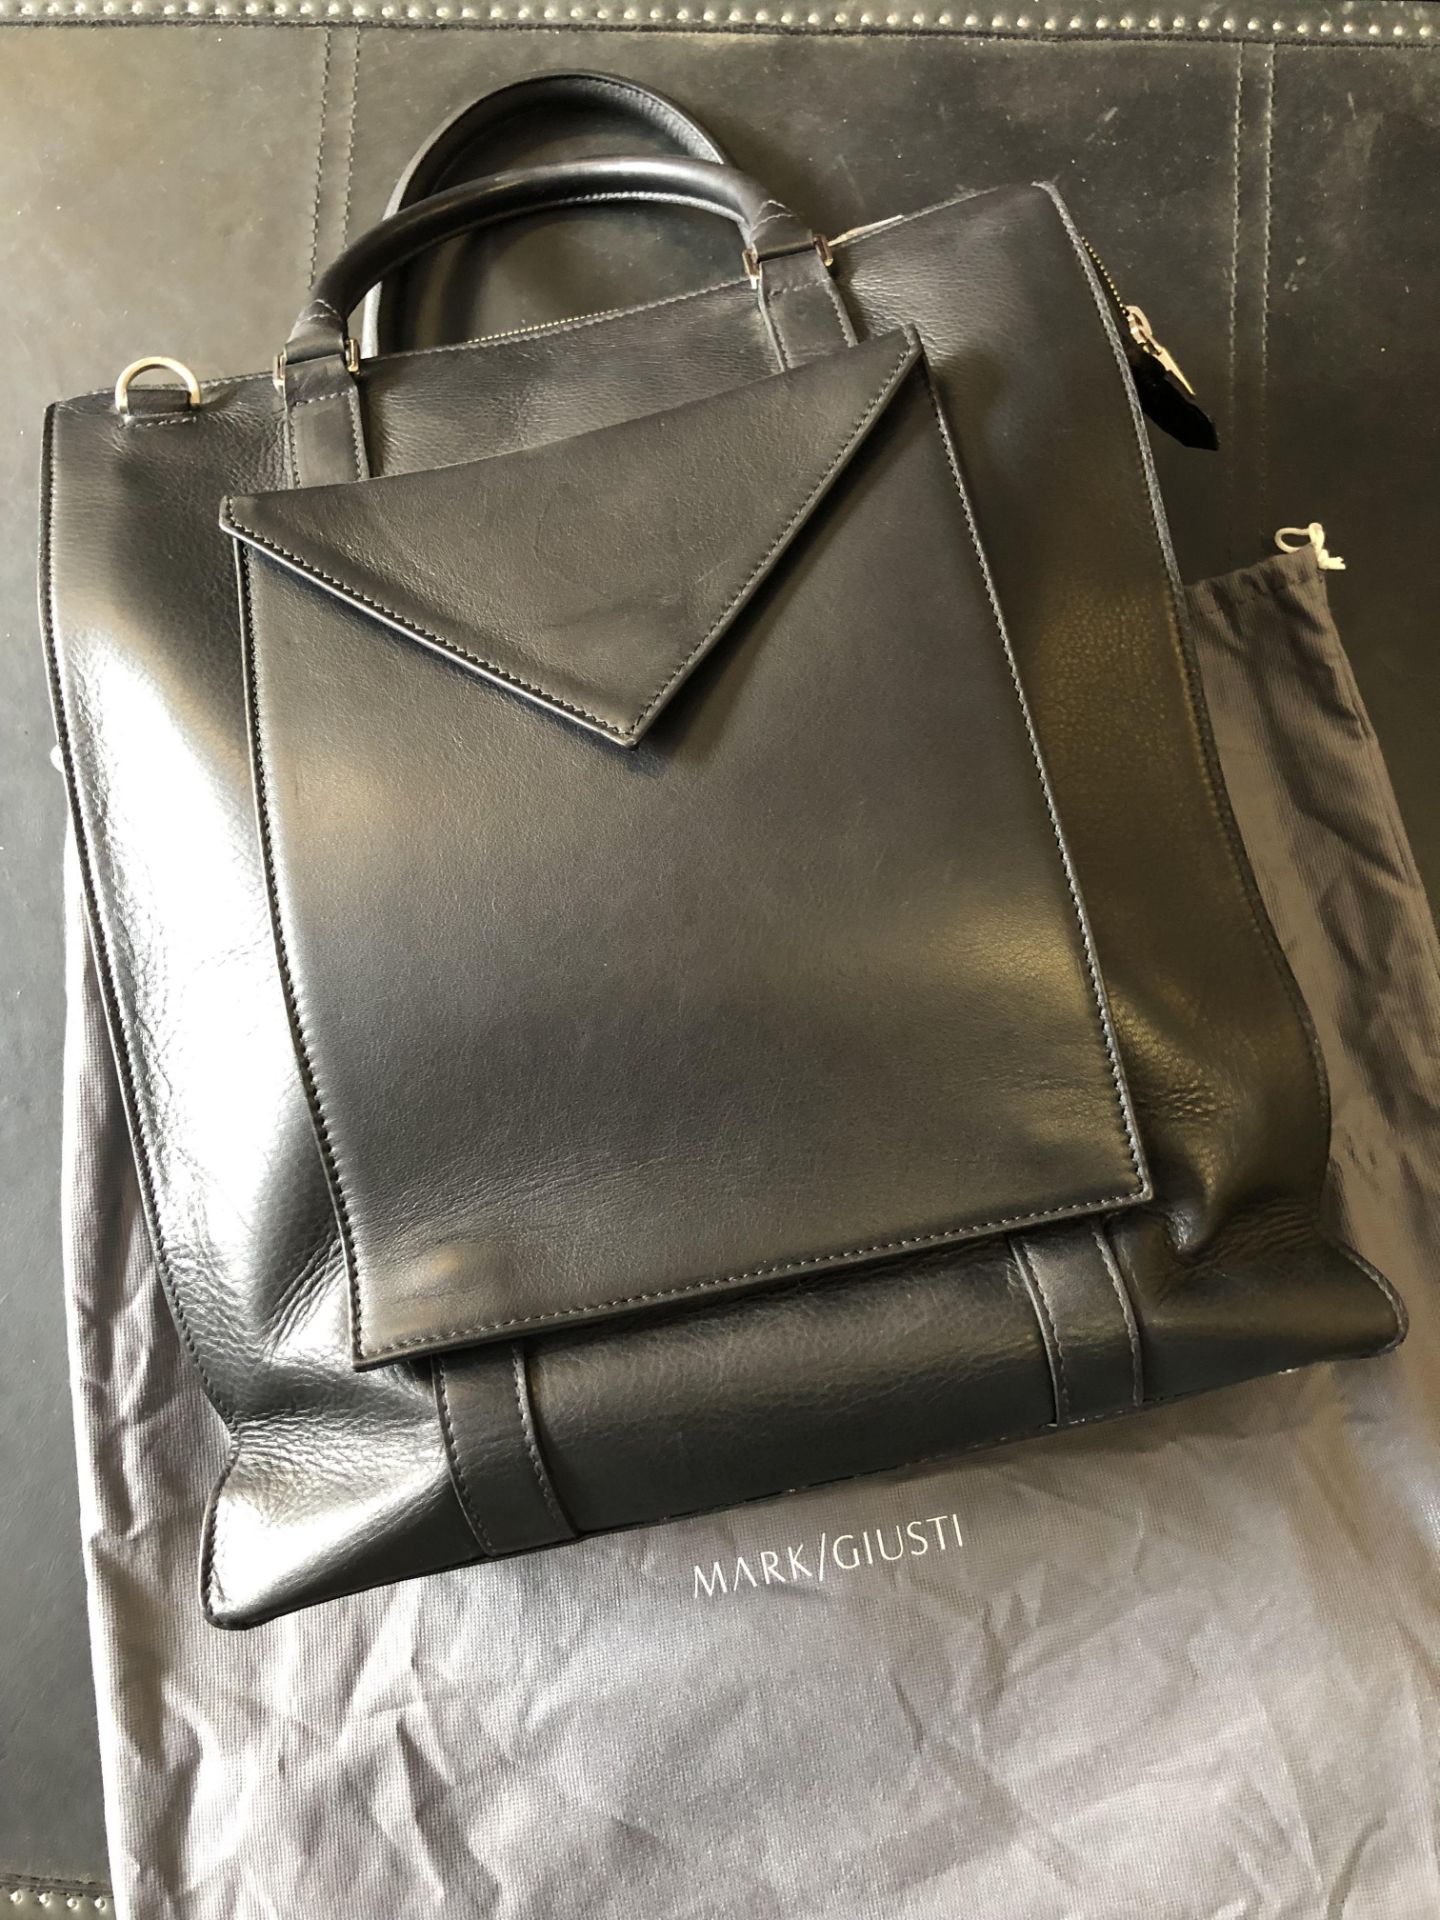 Mark Giusti Venice Black Leather Tote Bag With Ipad Case Venice RRP £745.00 The Venice Black Leather - Image 3 of 3